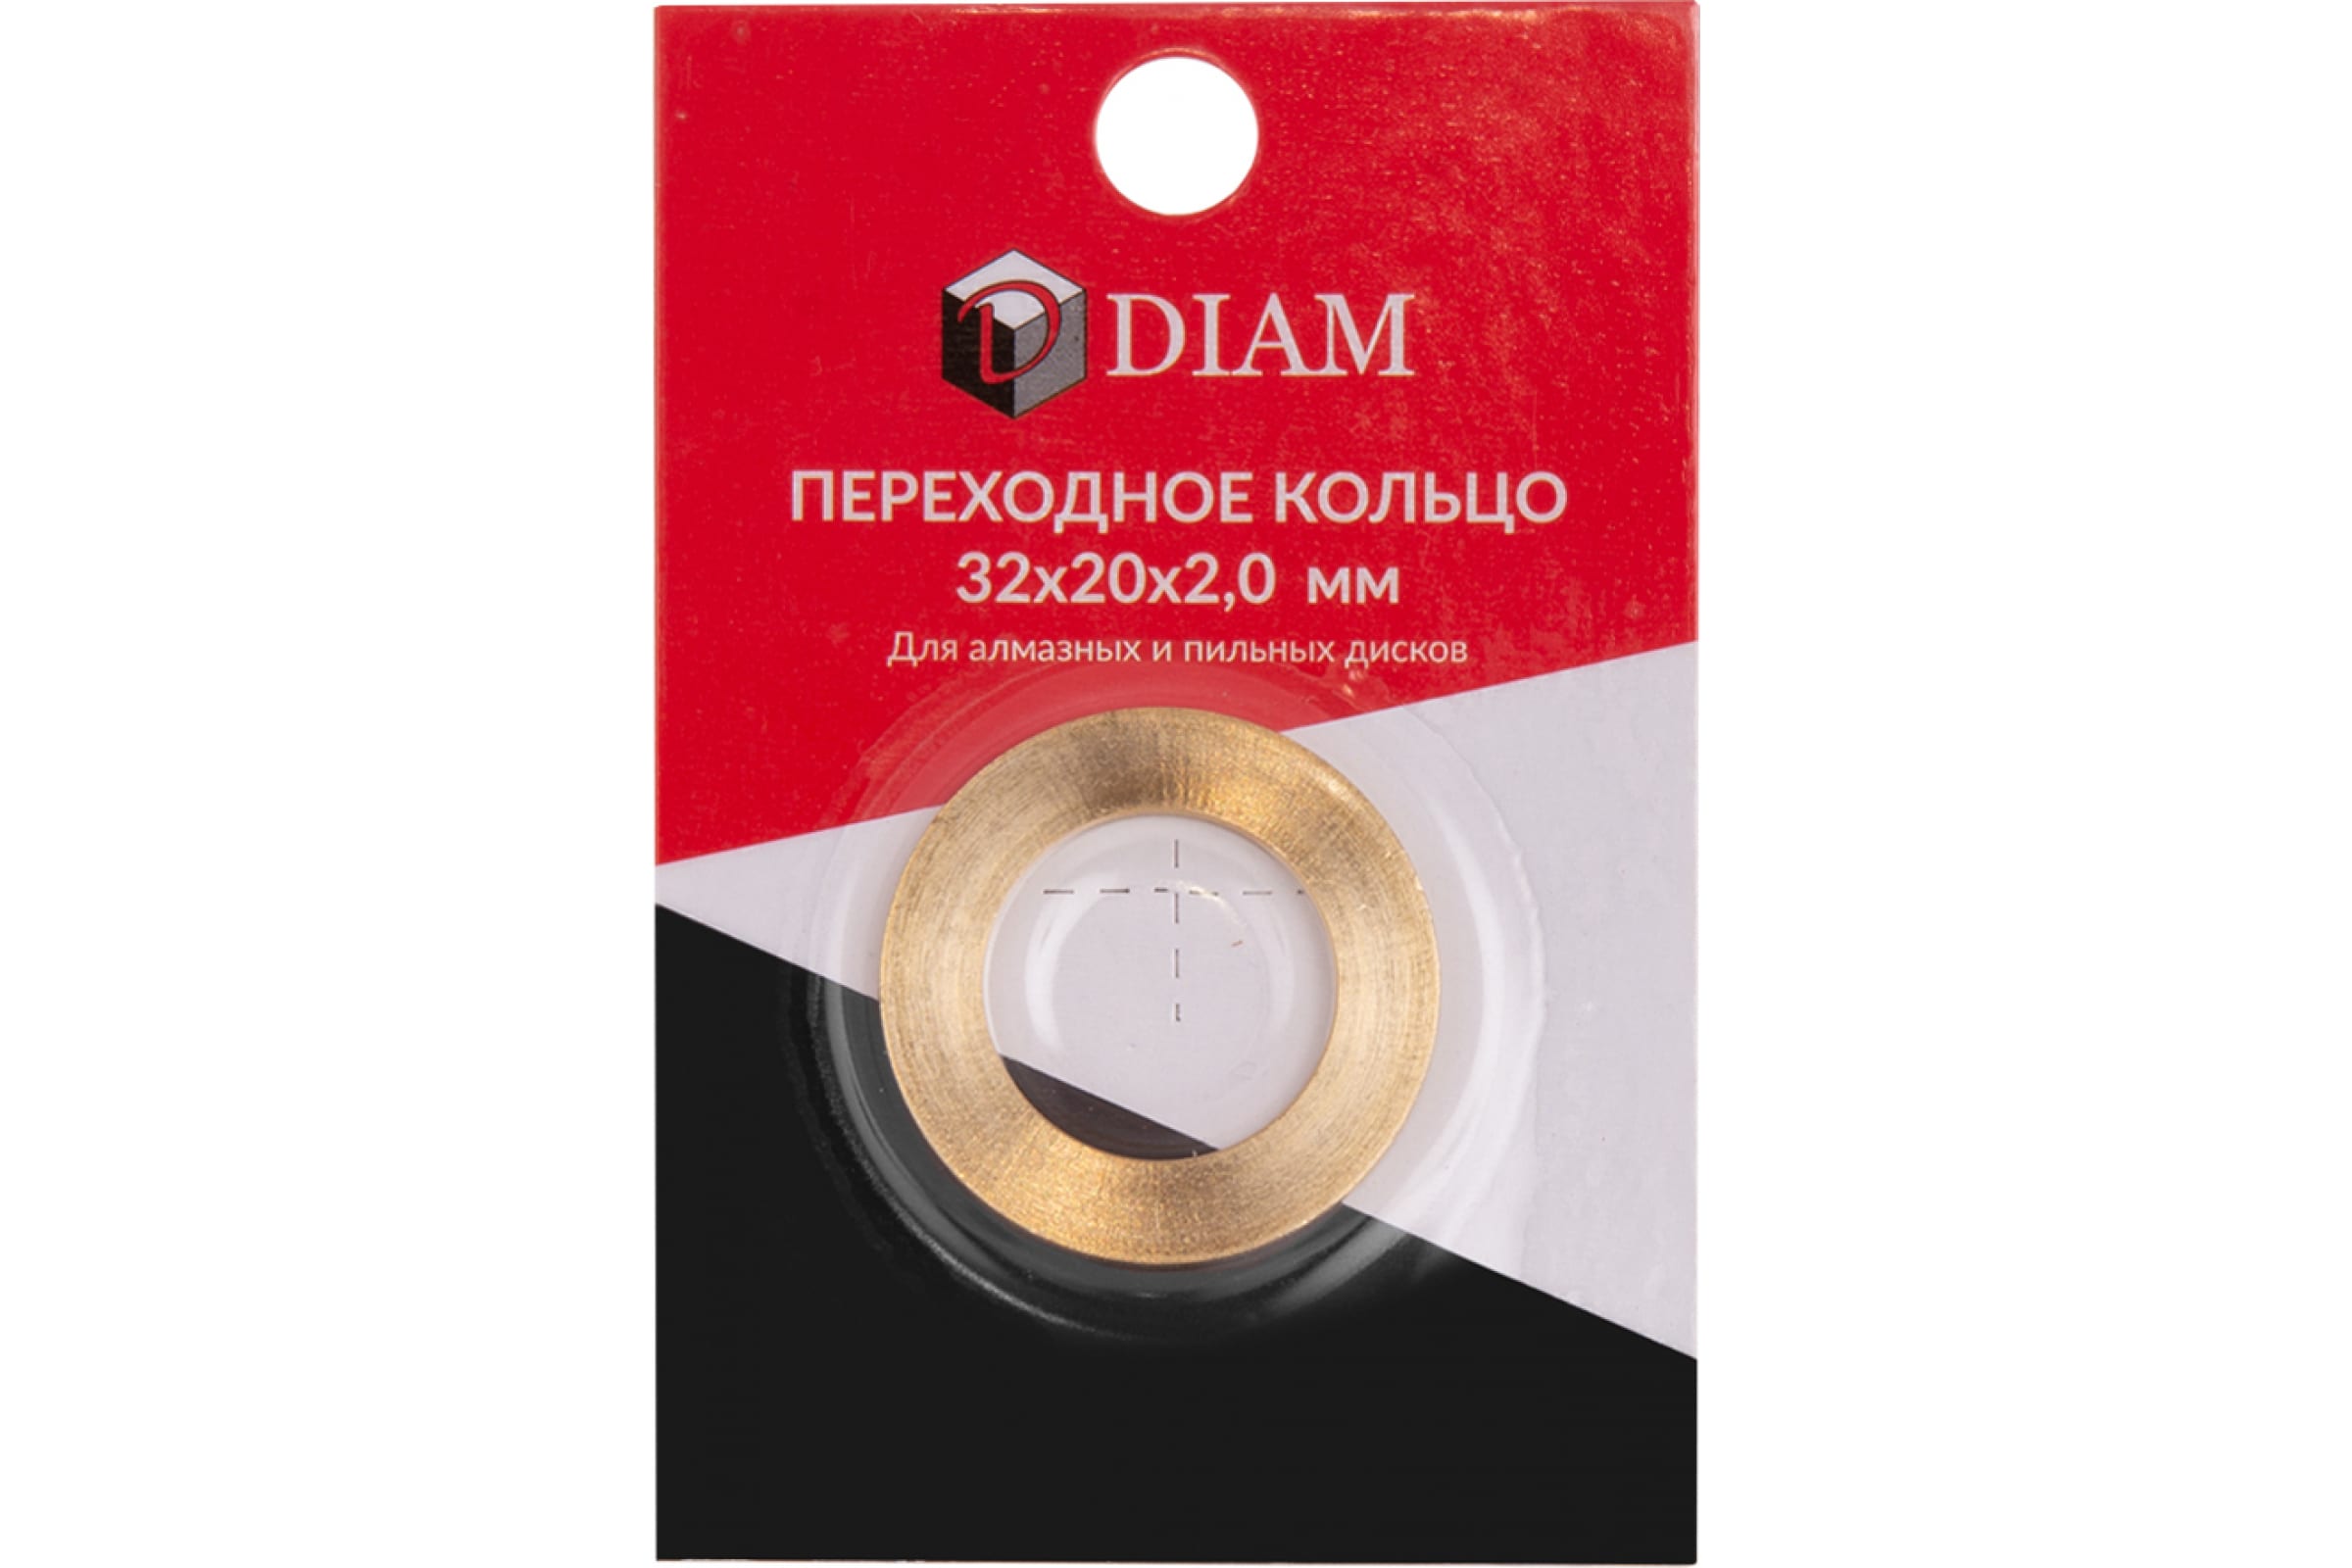 DIAM Переходное кольцо 32х20х2,0 640085 кольцо переходное diam 25 4х20х2 0 640083 diam